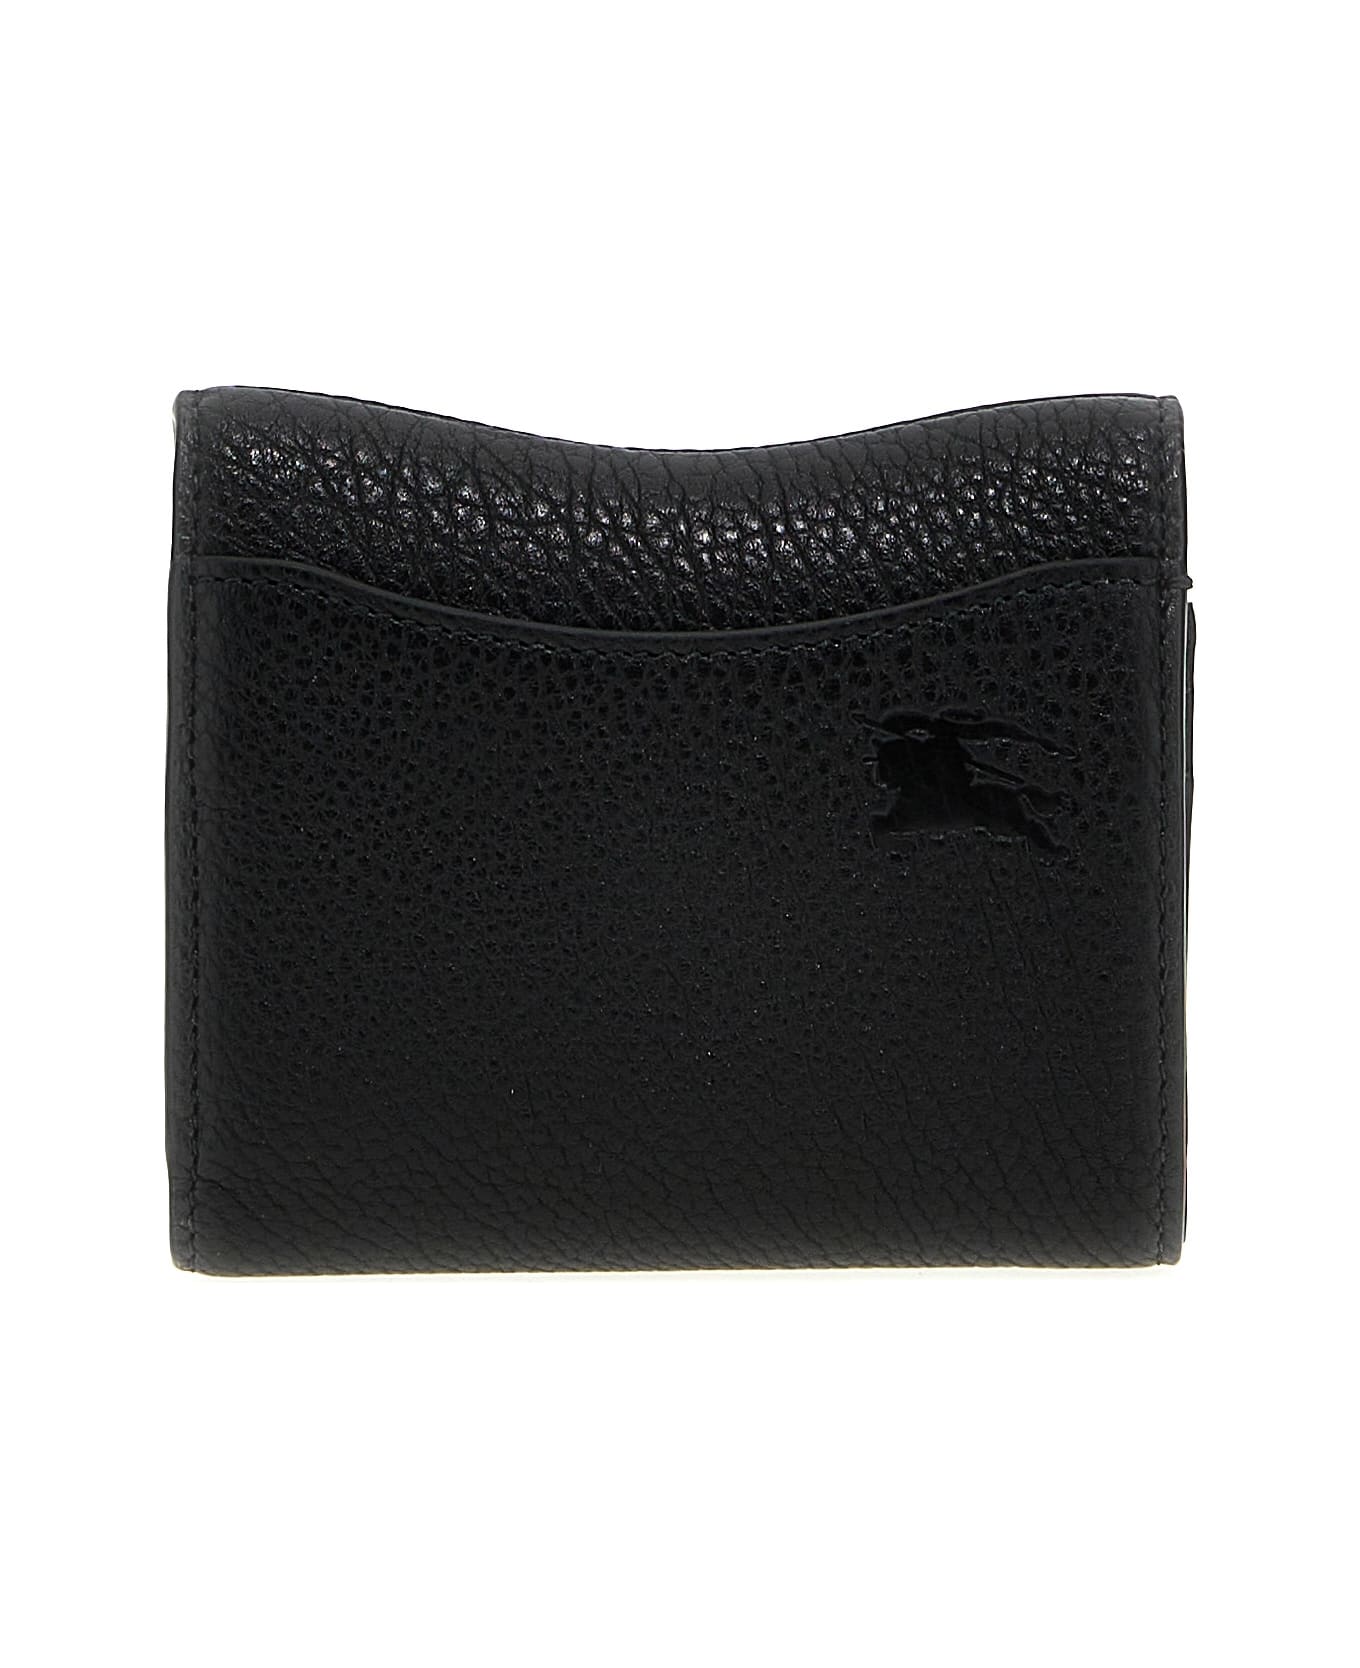 Burberry 'rocking Horse' Wallet - Black   財布